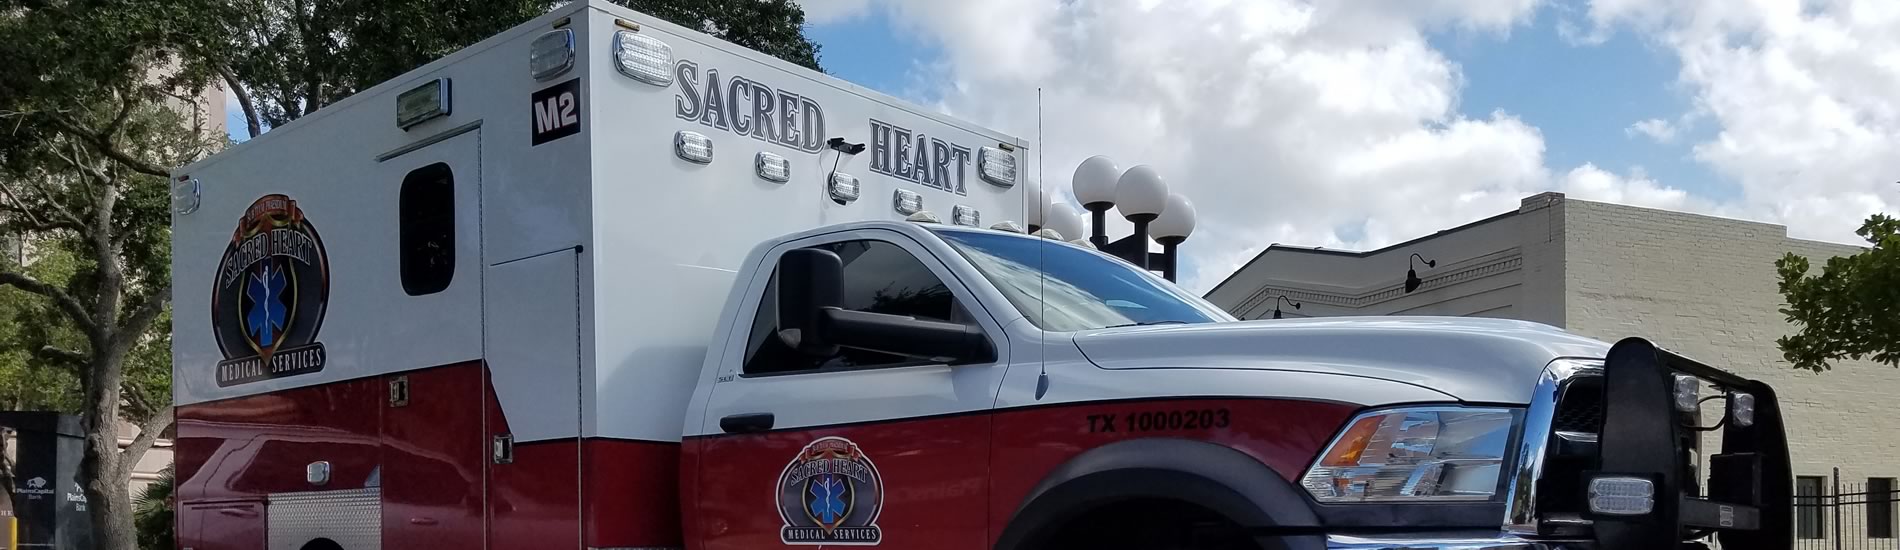 Sacred Heart Emergency Medical Service Victoria Texas